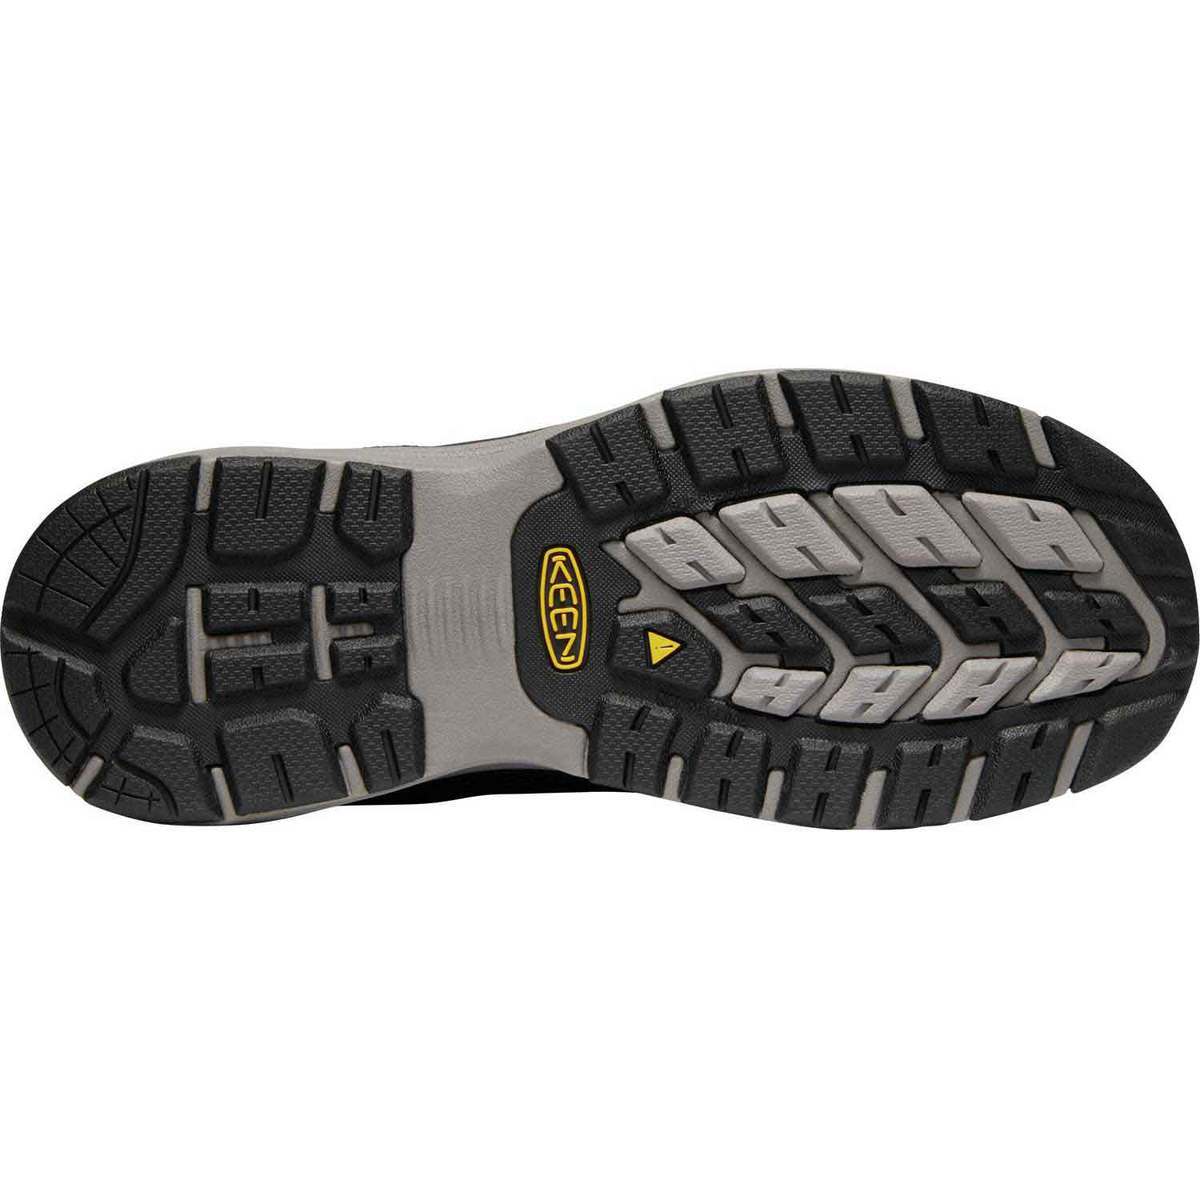 KEEN Men's Sparta Aluminum Toe Work Shoes - Black - Size 12 - Black 12 ...